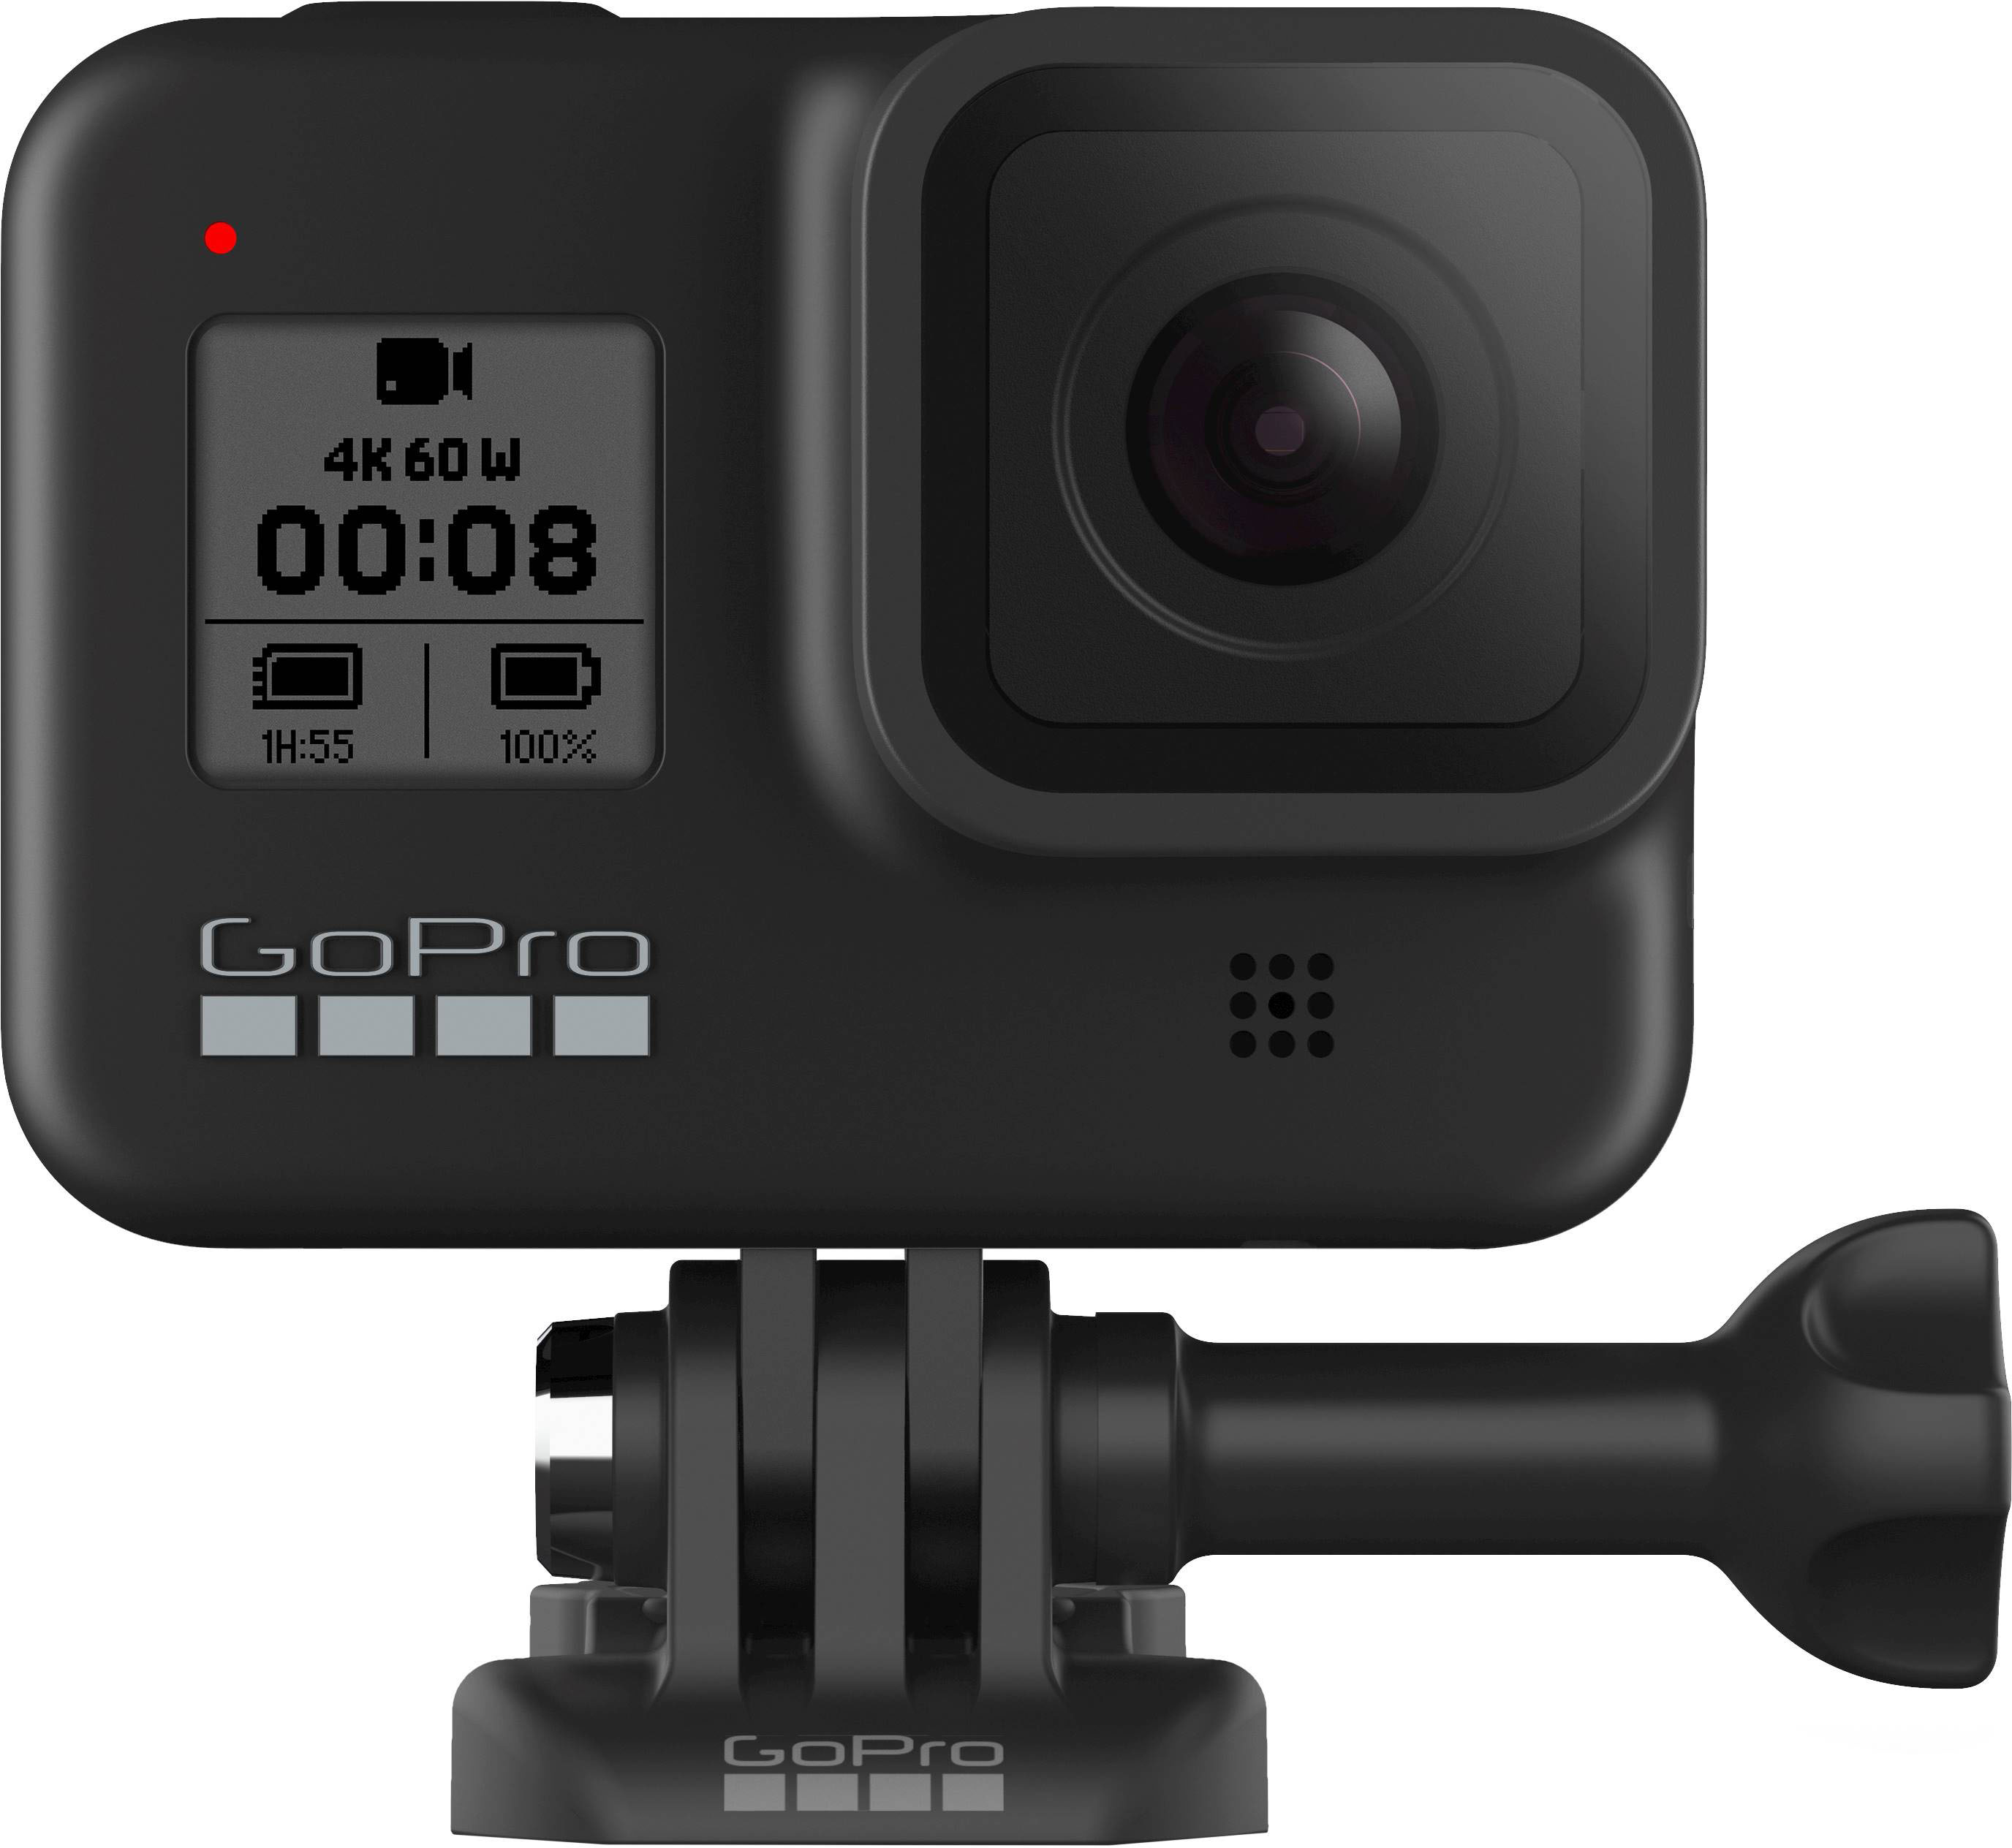 GoPro - Hero 8 Black 4k Action Camera $229.99 @ Best Buy